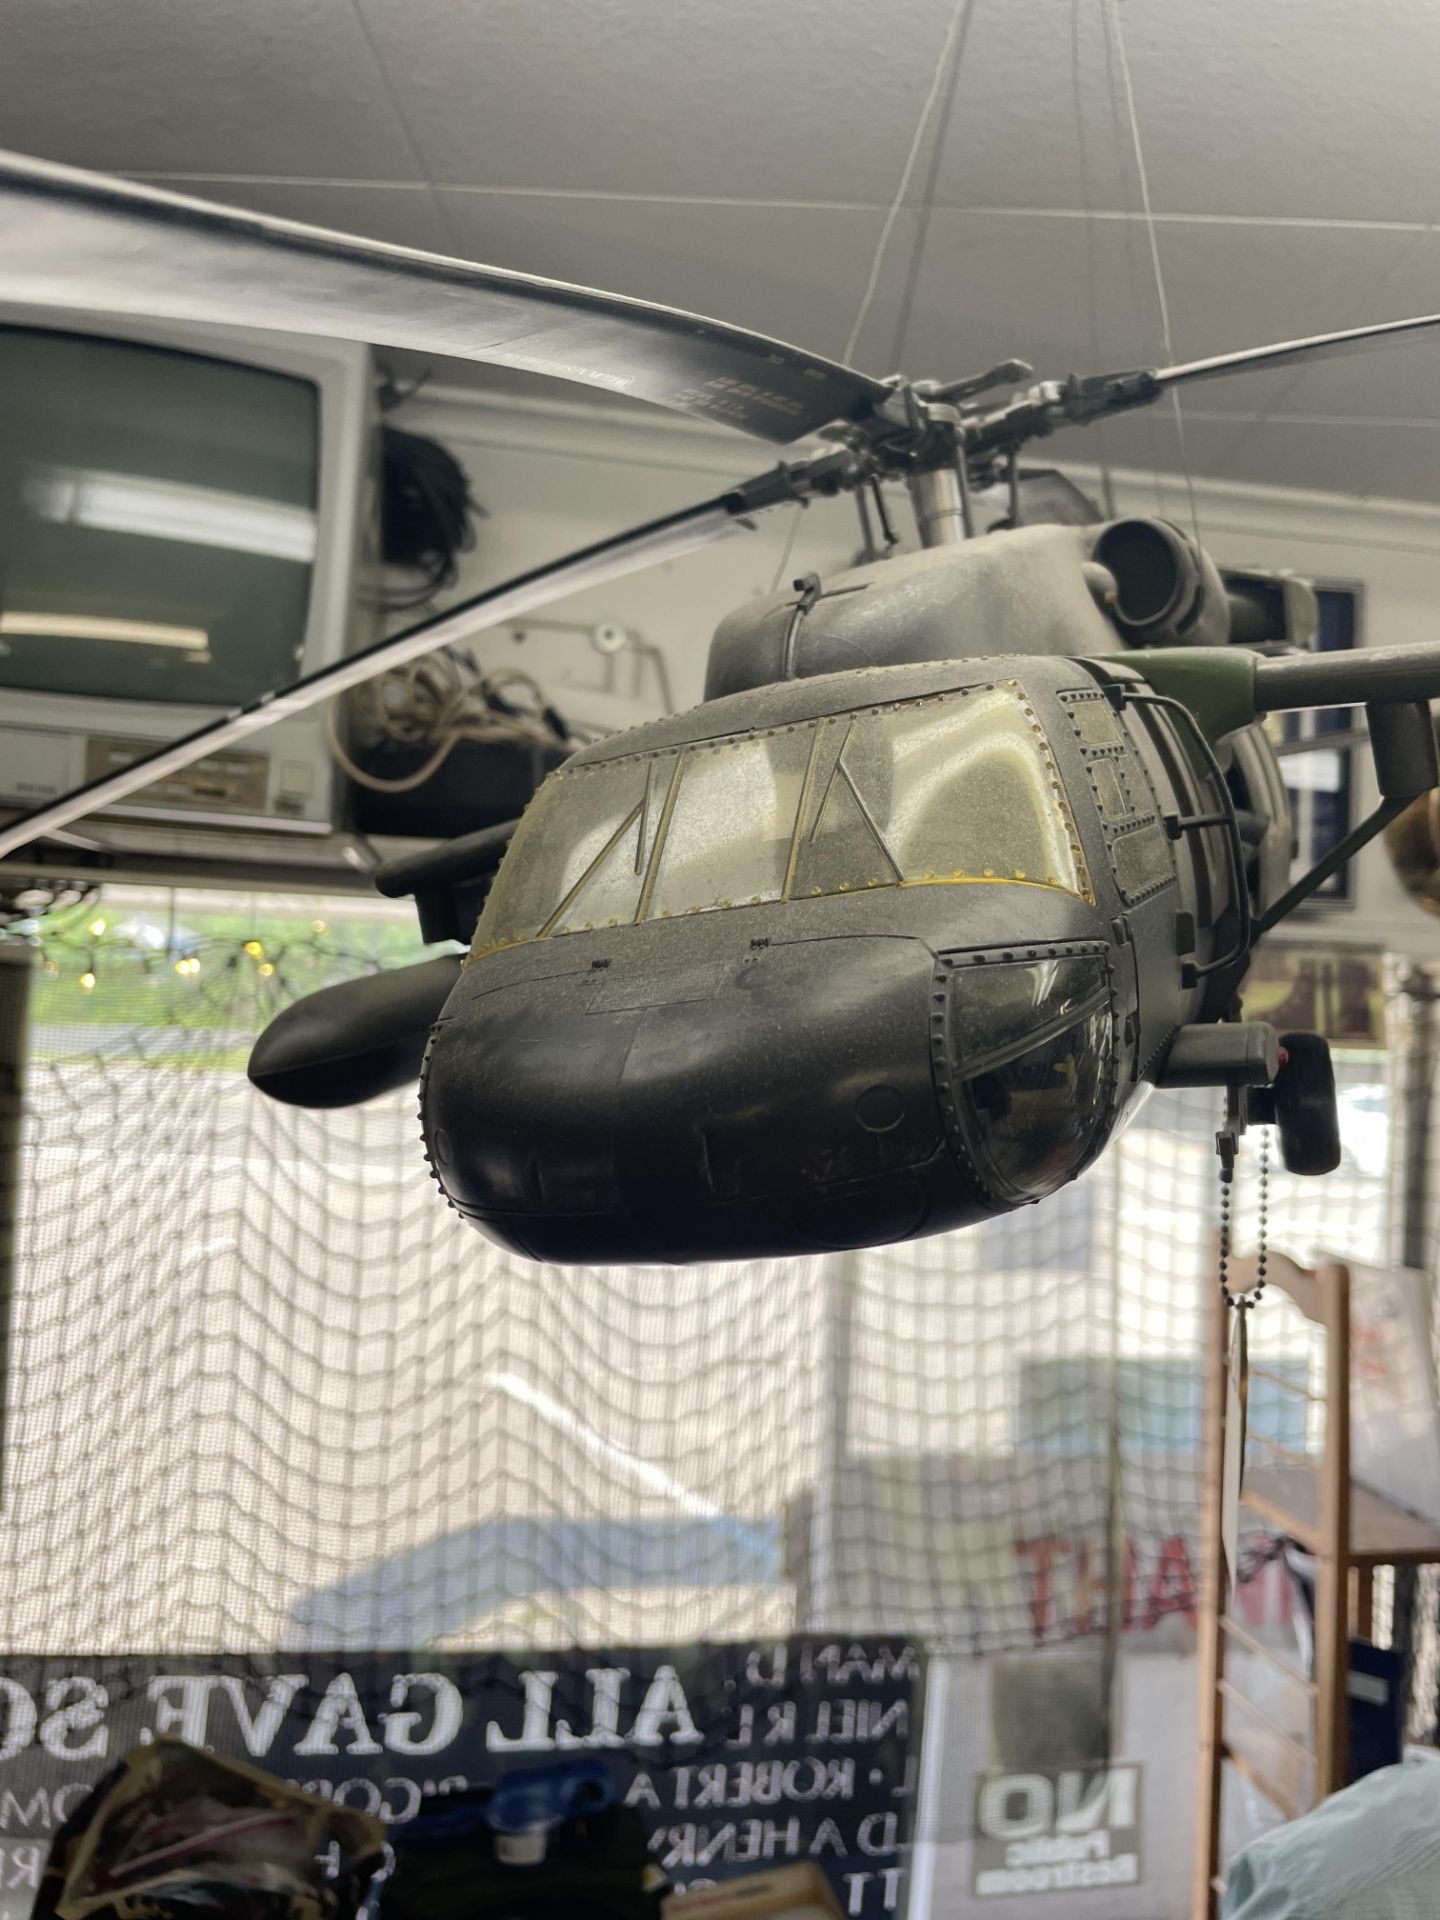 Army Helicopter Model Highly Details Plastic Desert Storm Vintage, 34" Fuselage, 33" Rotor - Image 5 of 6